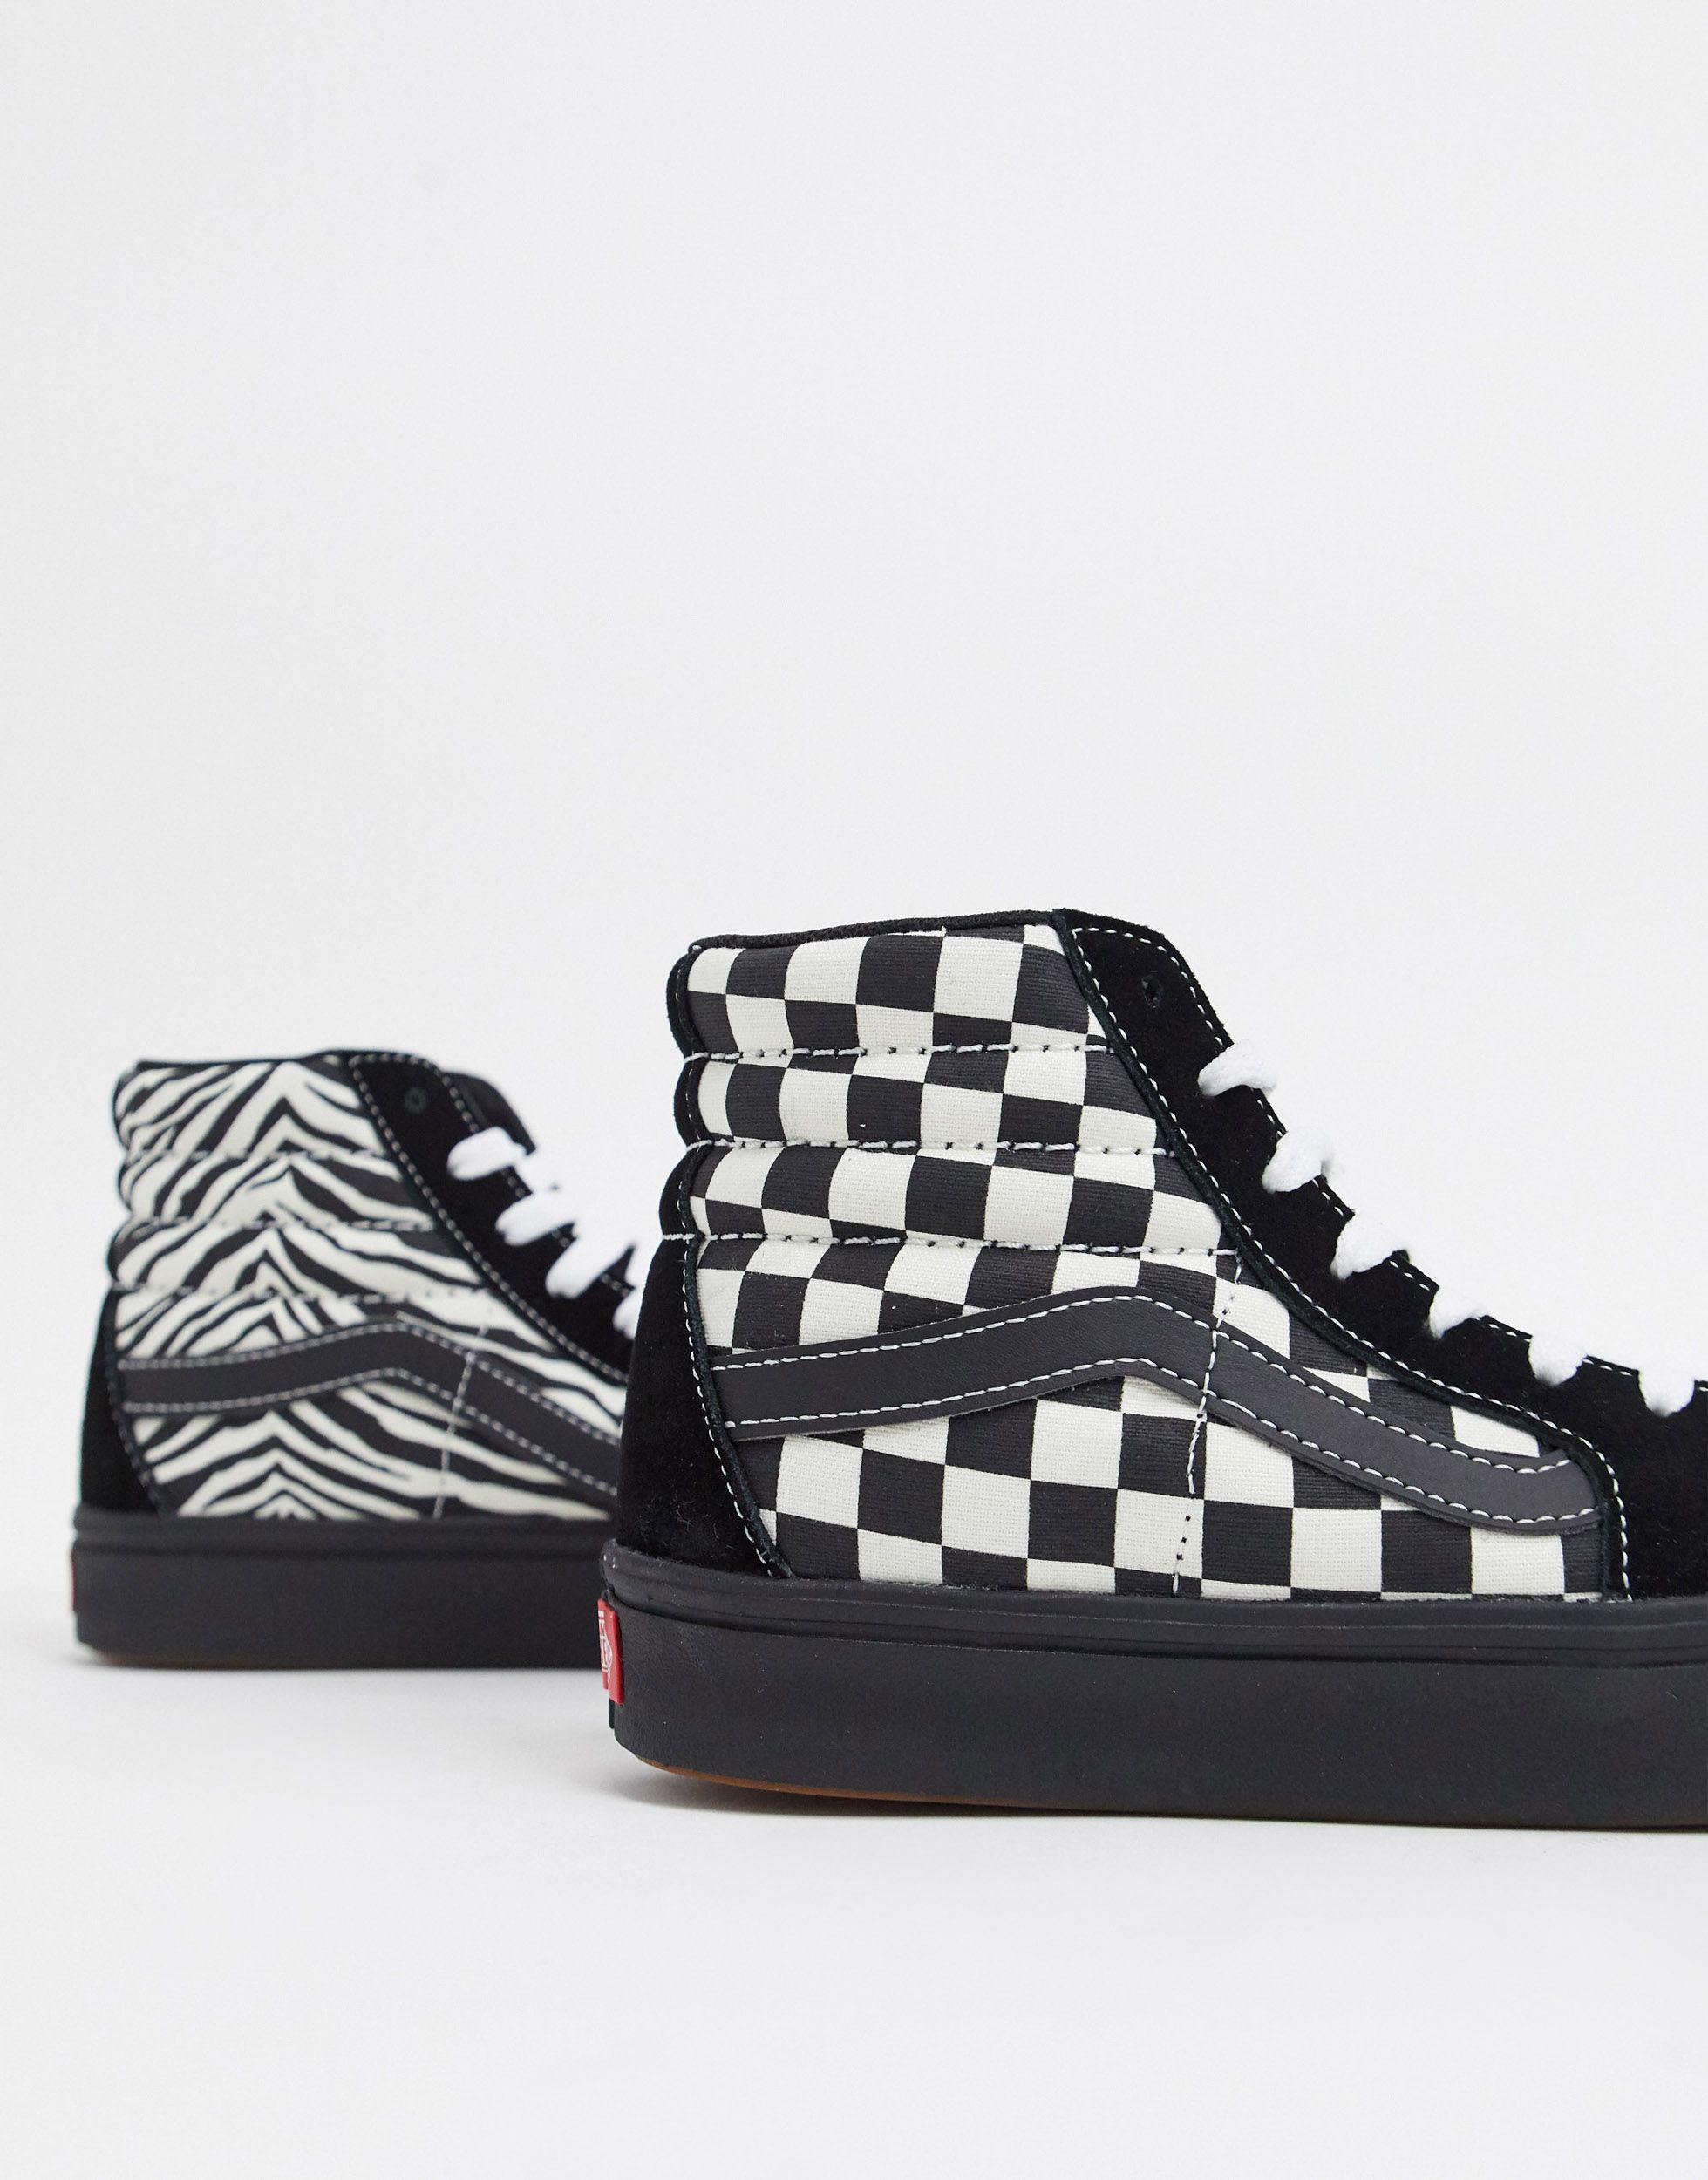 Vans Rubber Sk8-hi Zebra Sneakers in Black | Lyst